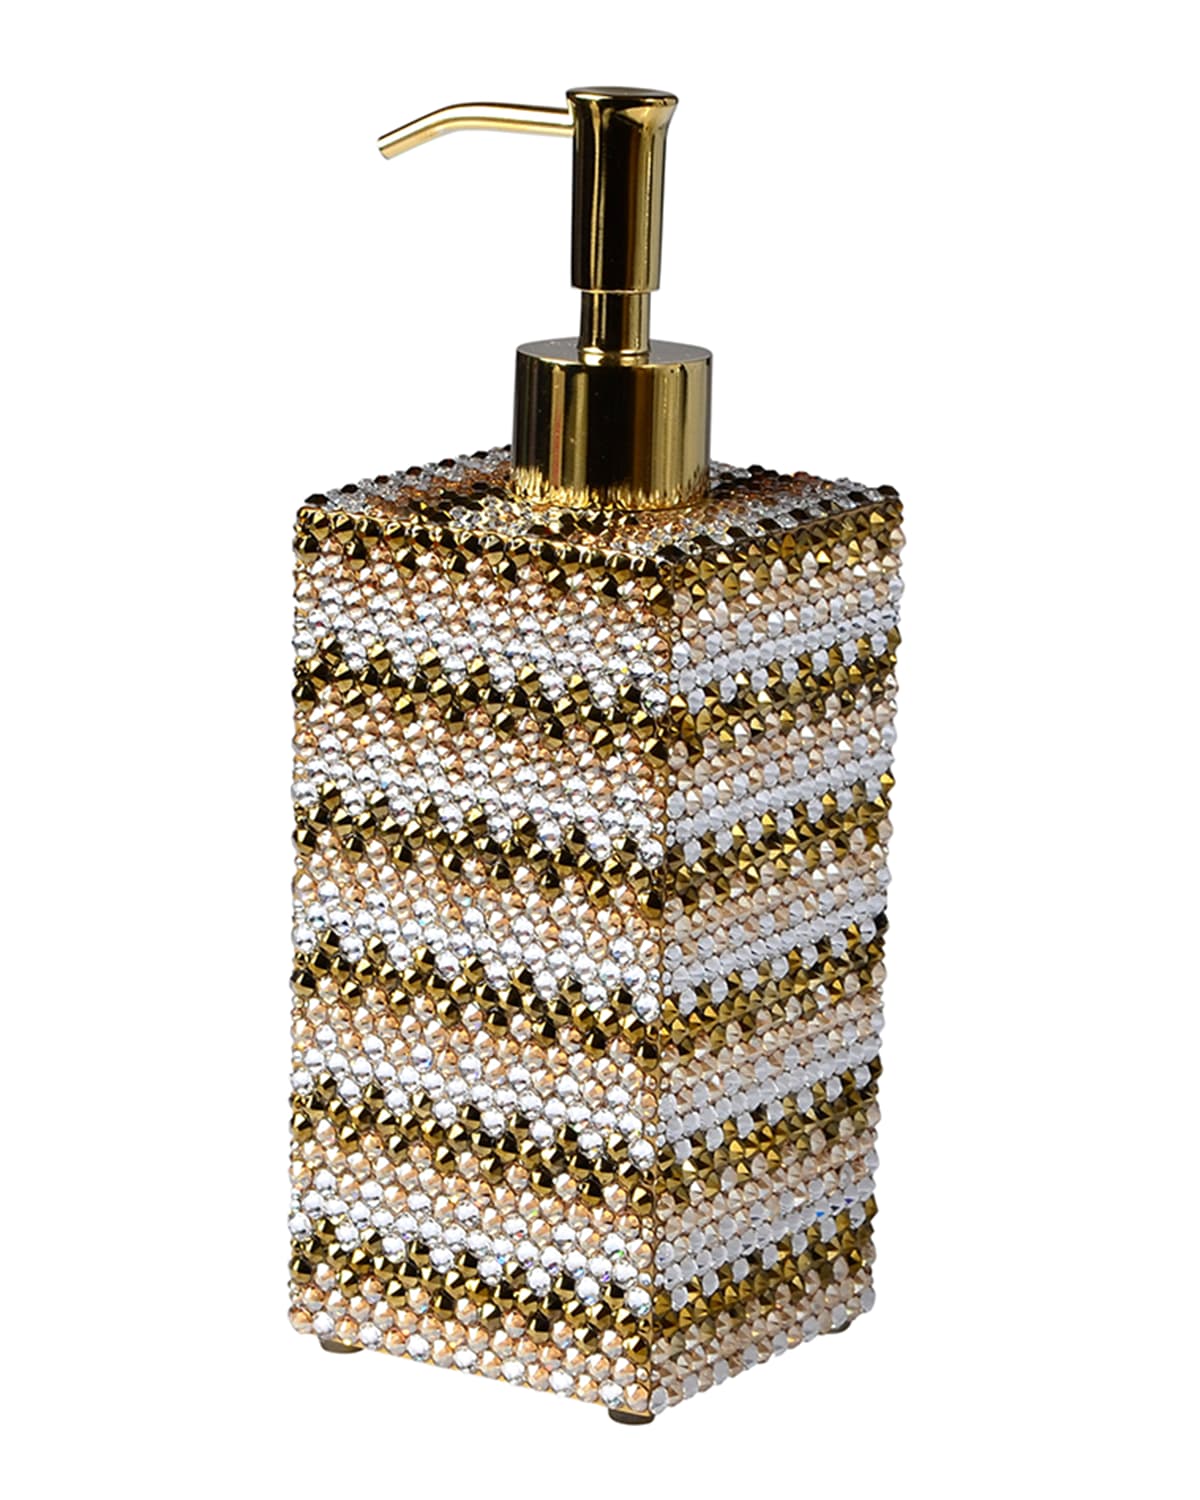 Biarritz Soap Pump with Swarovski Crystals, Gold